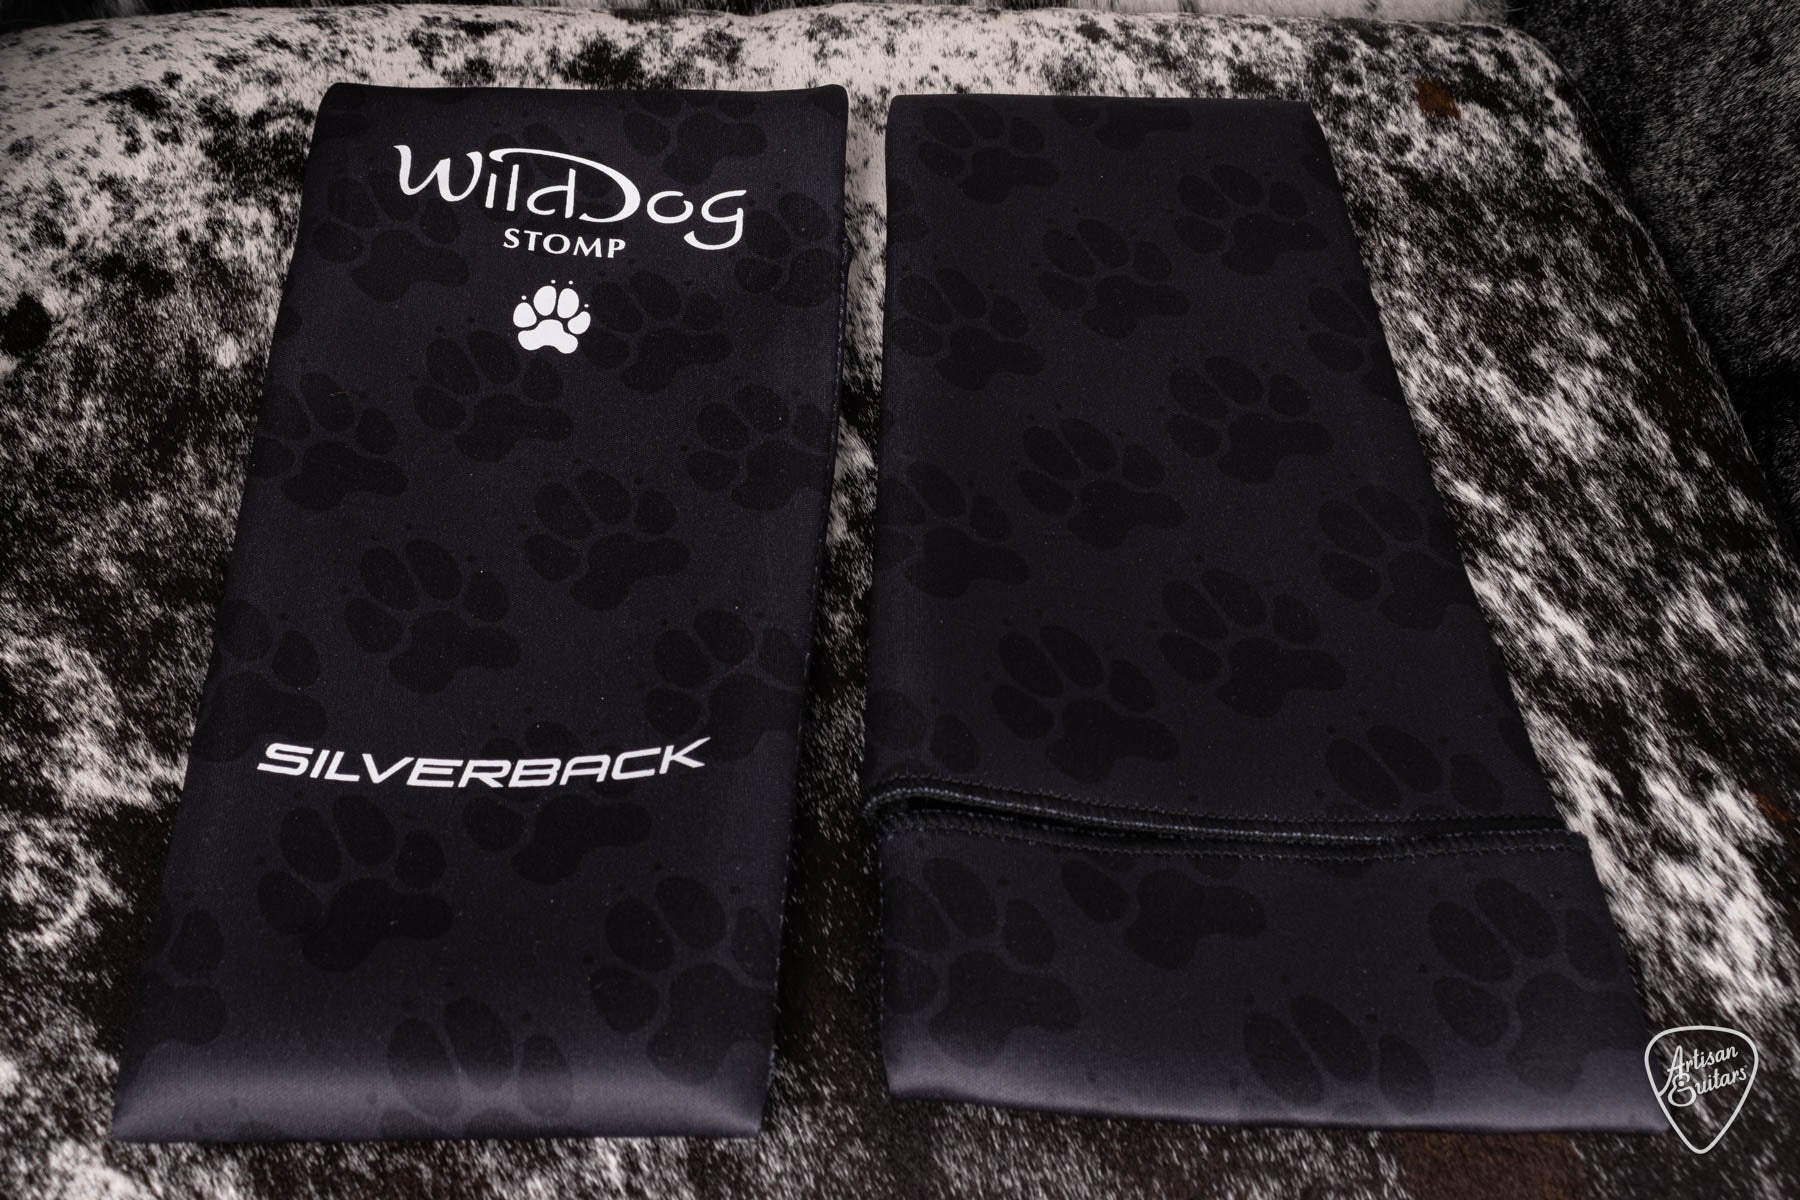 Wild Dog Silverback Stomp Box with Jingles - 16675